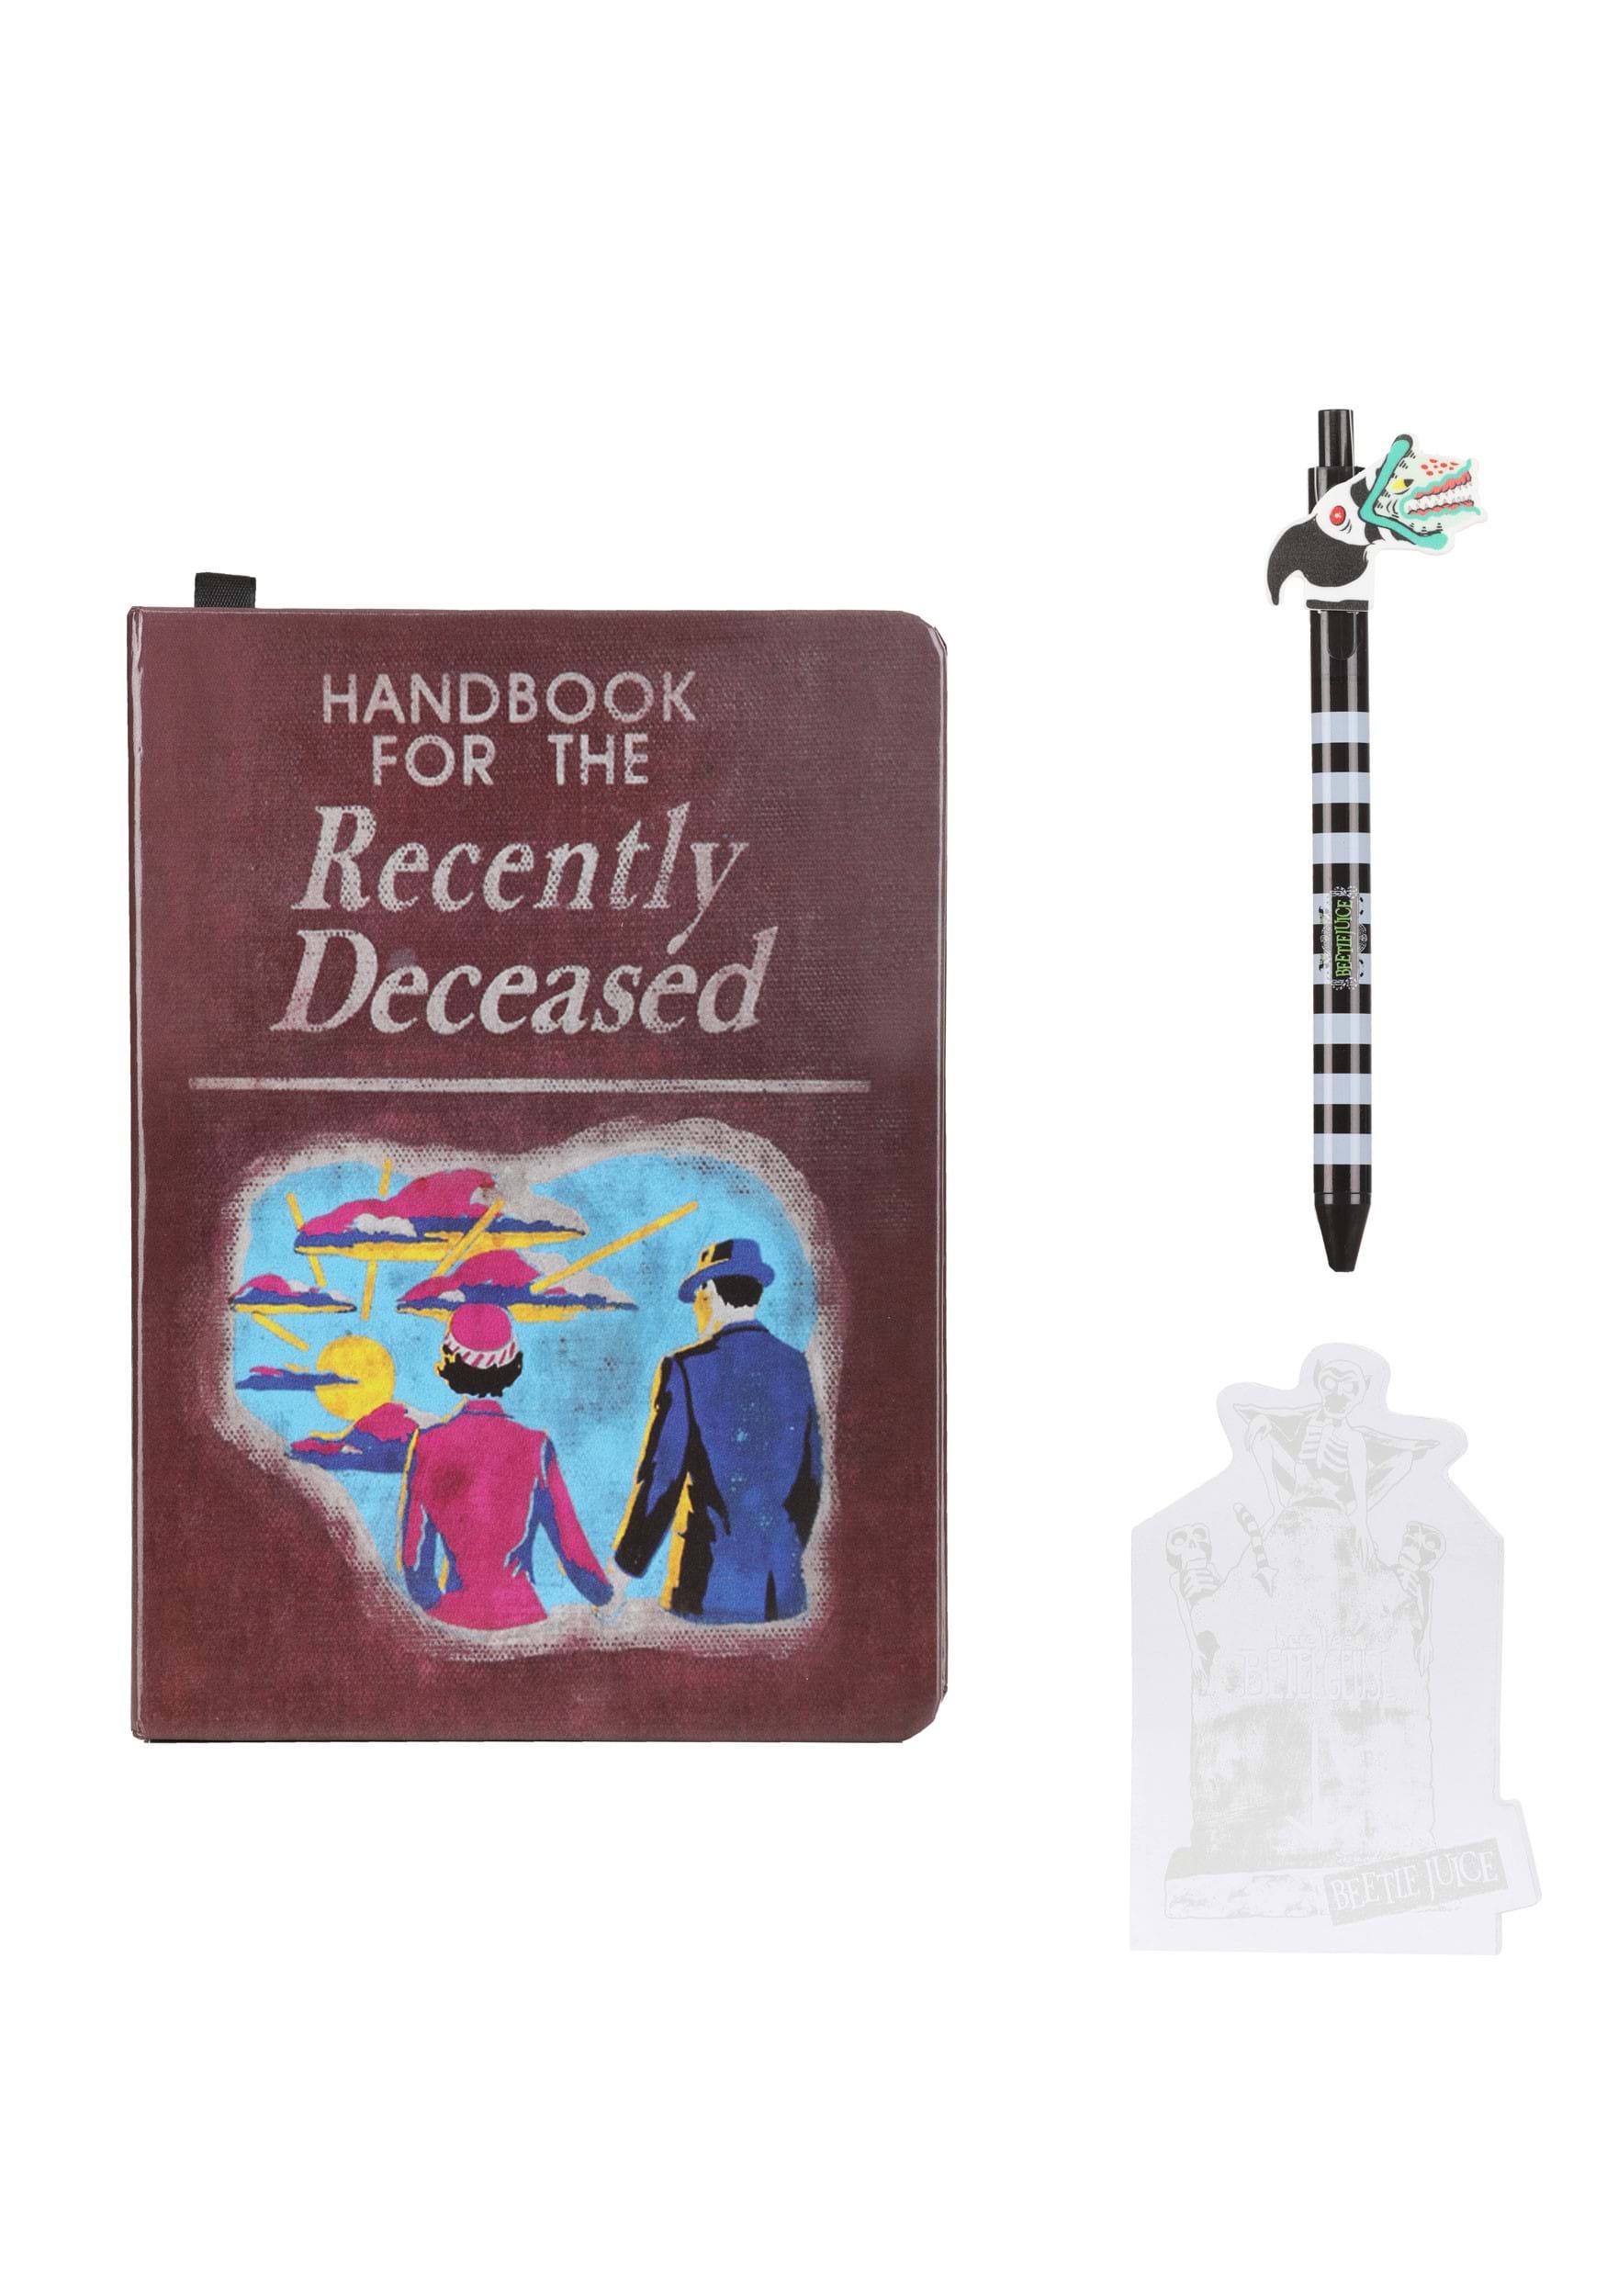 Beetlejuice Handbook For The Recently Deceased Notebook Bundle